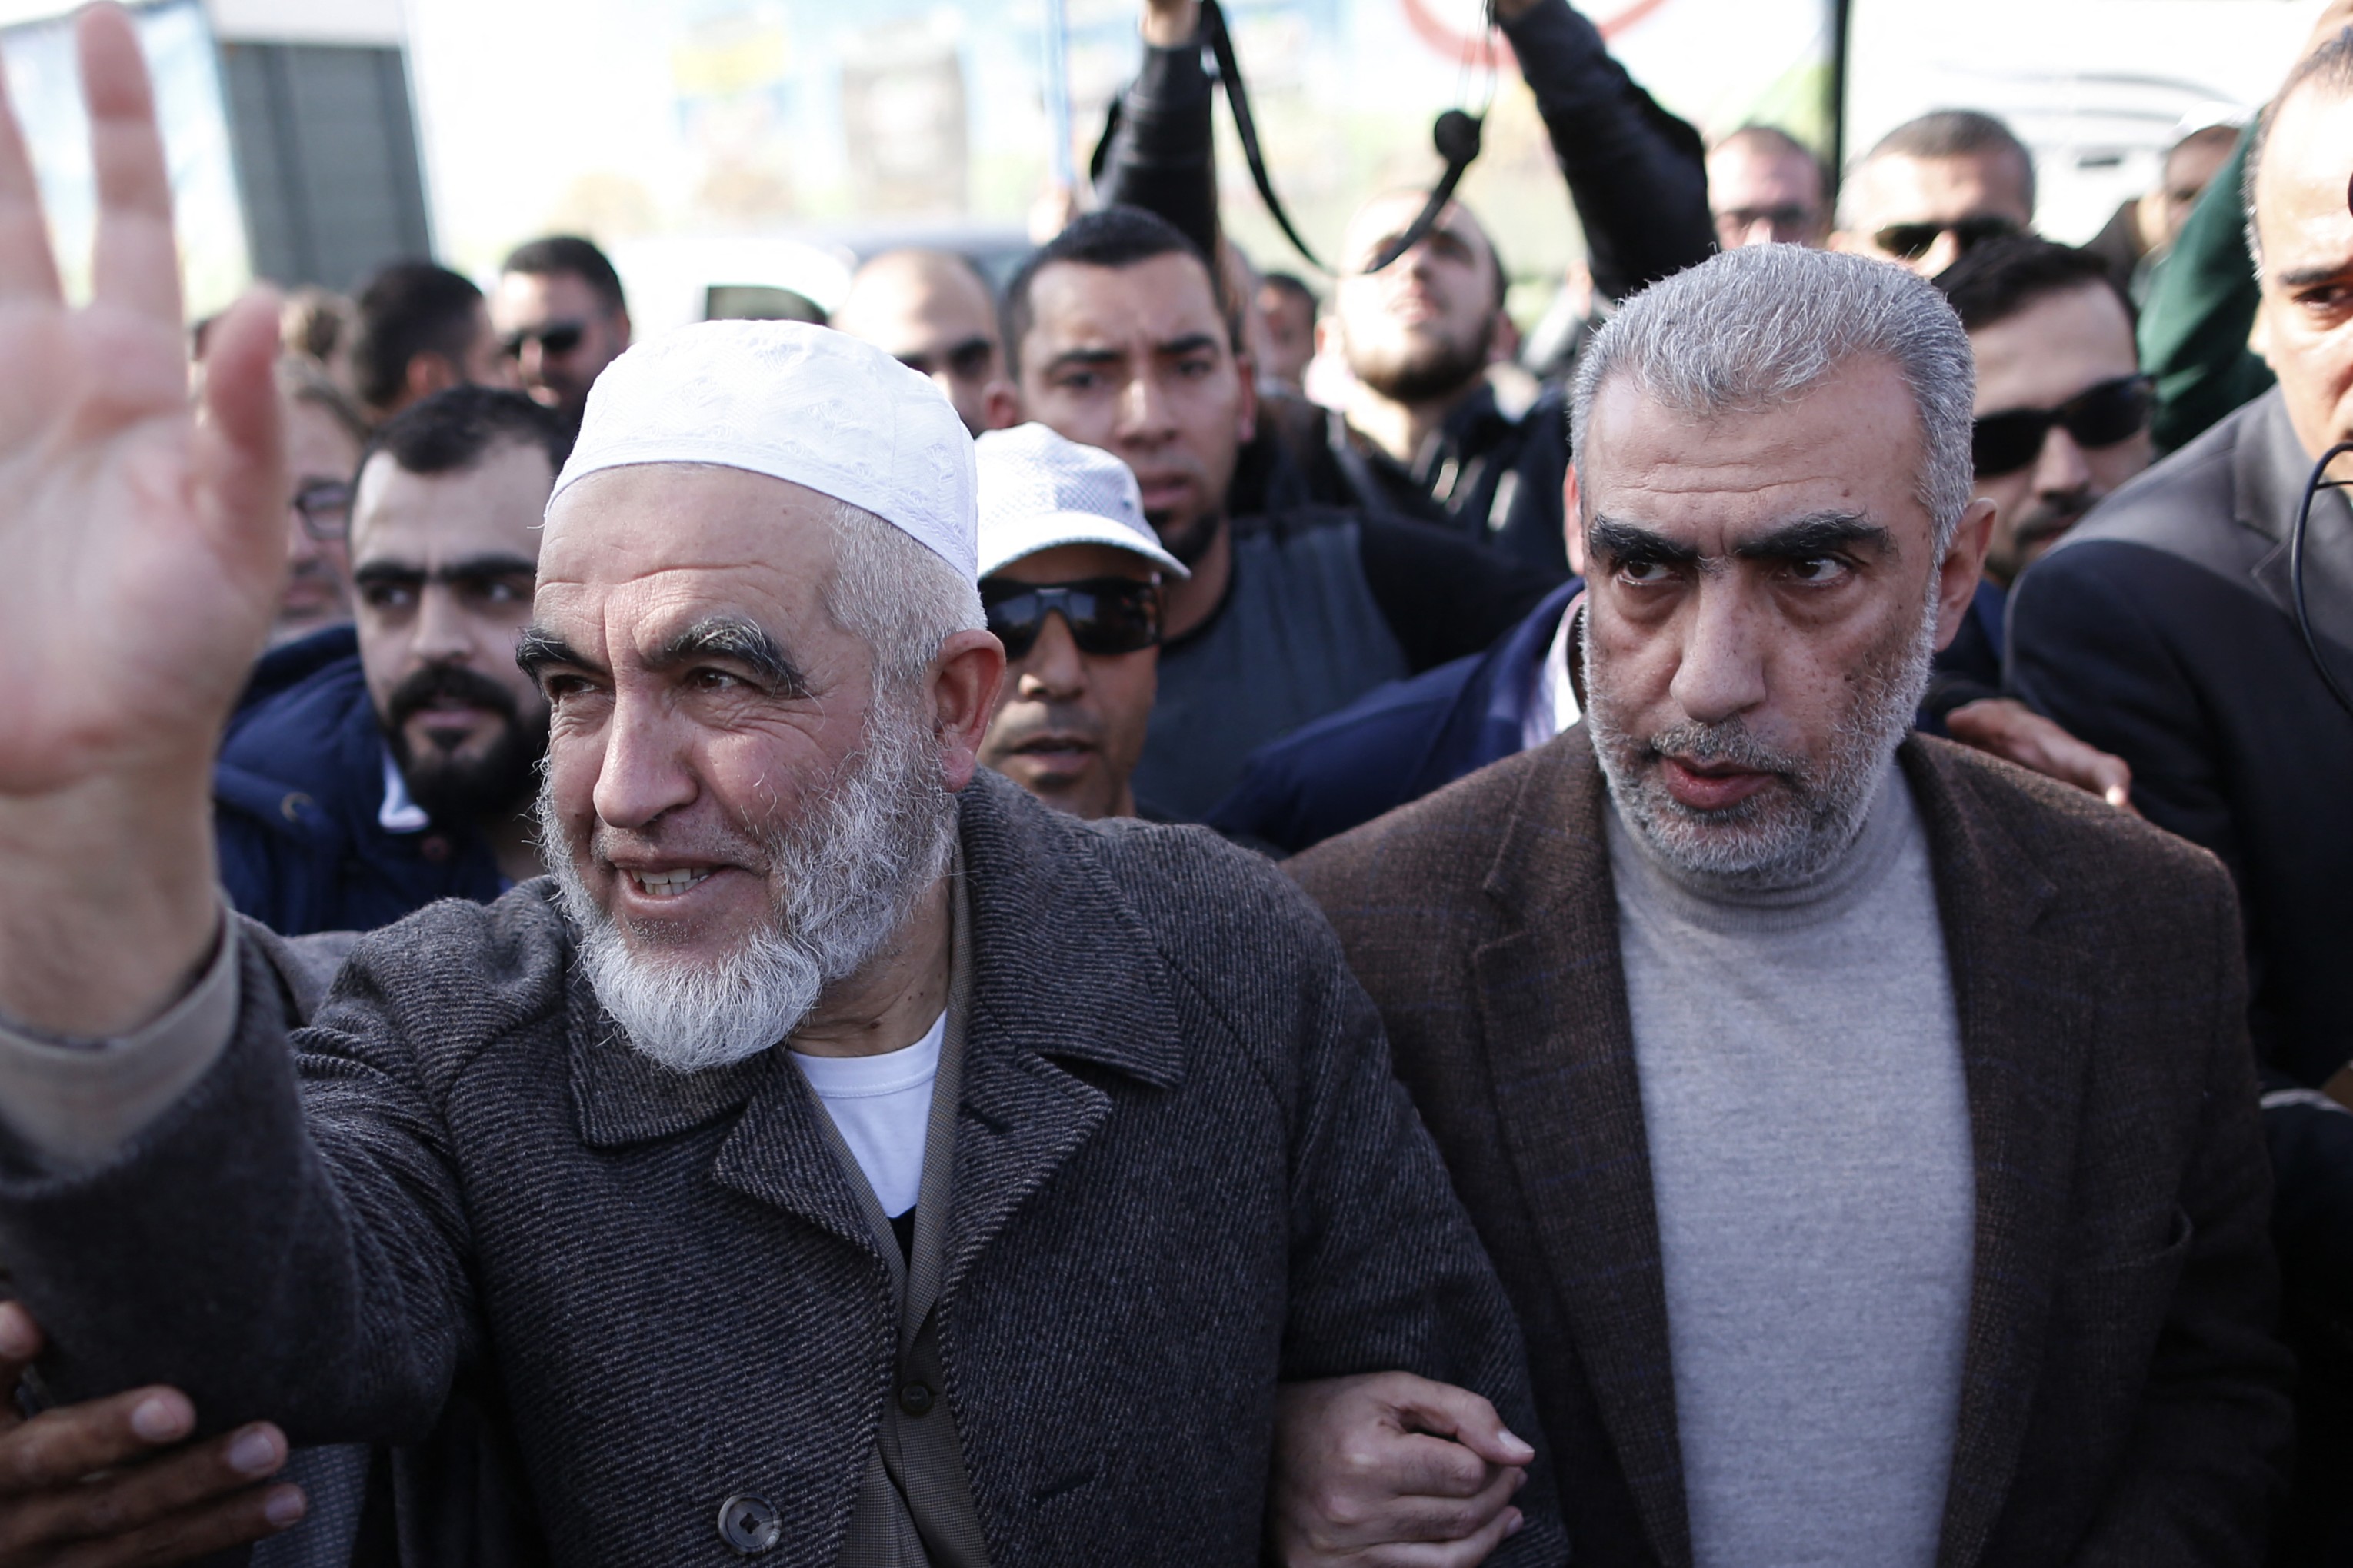 Kamal Khatib (R) at a rally with Sheikh Raed Salah (L) in Umm al-Fahm on 17 January 2017. (AFP)